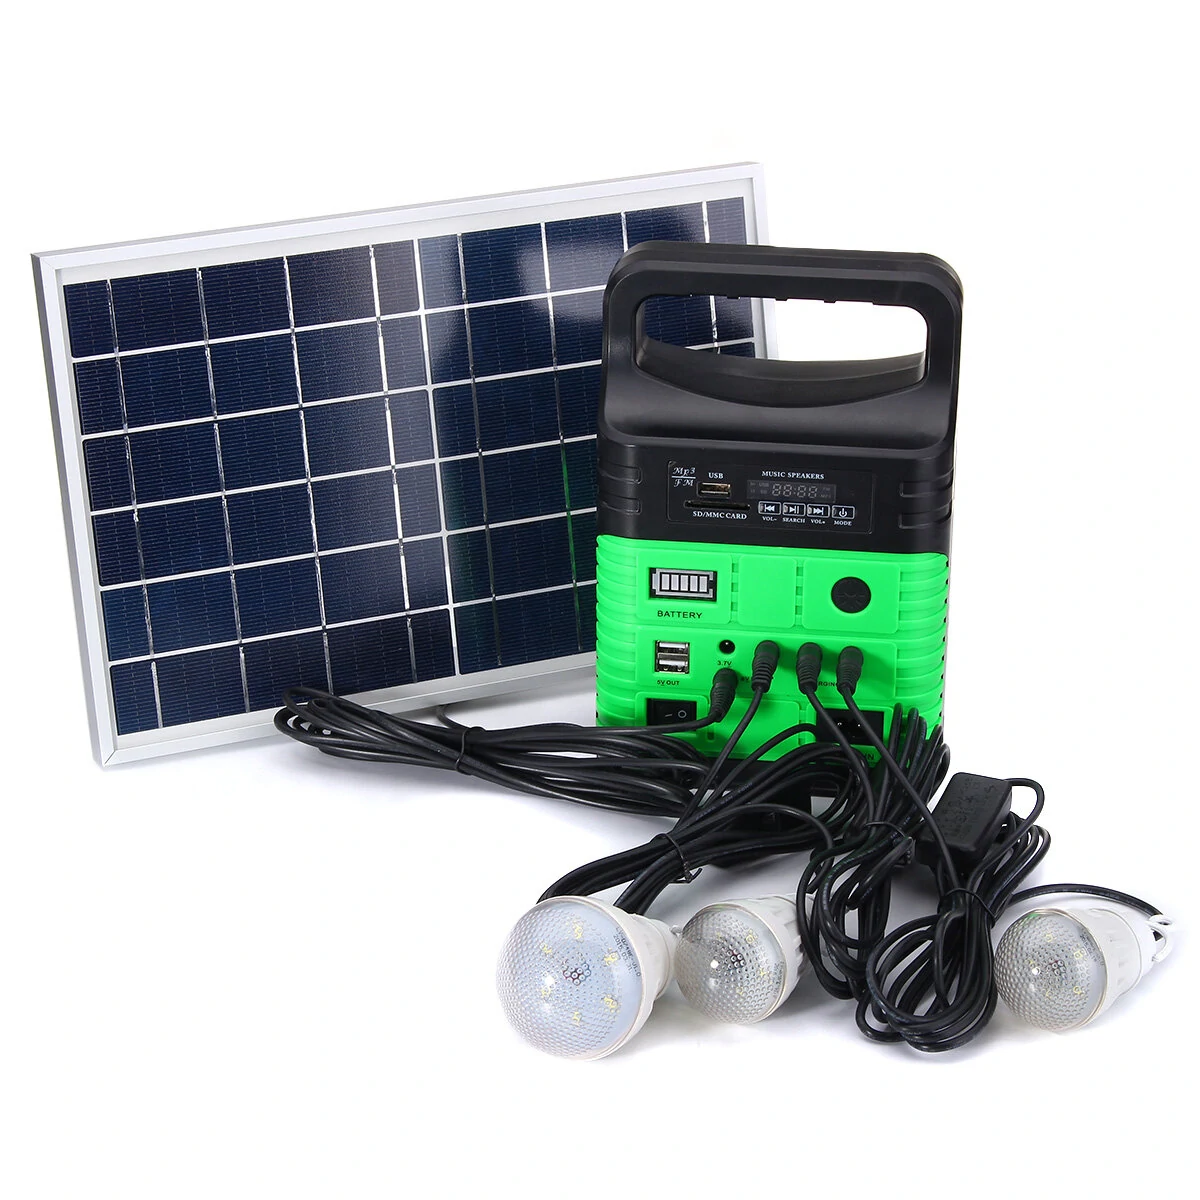 10W 6V Solar Panel Portable Solar AC Kit Solar Power System Camping Portable Generator With Bulbs - Green